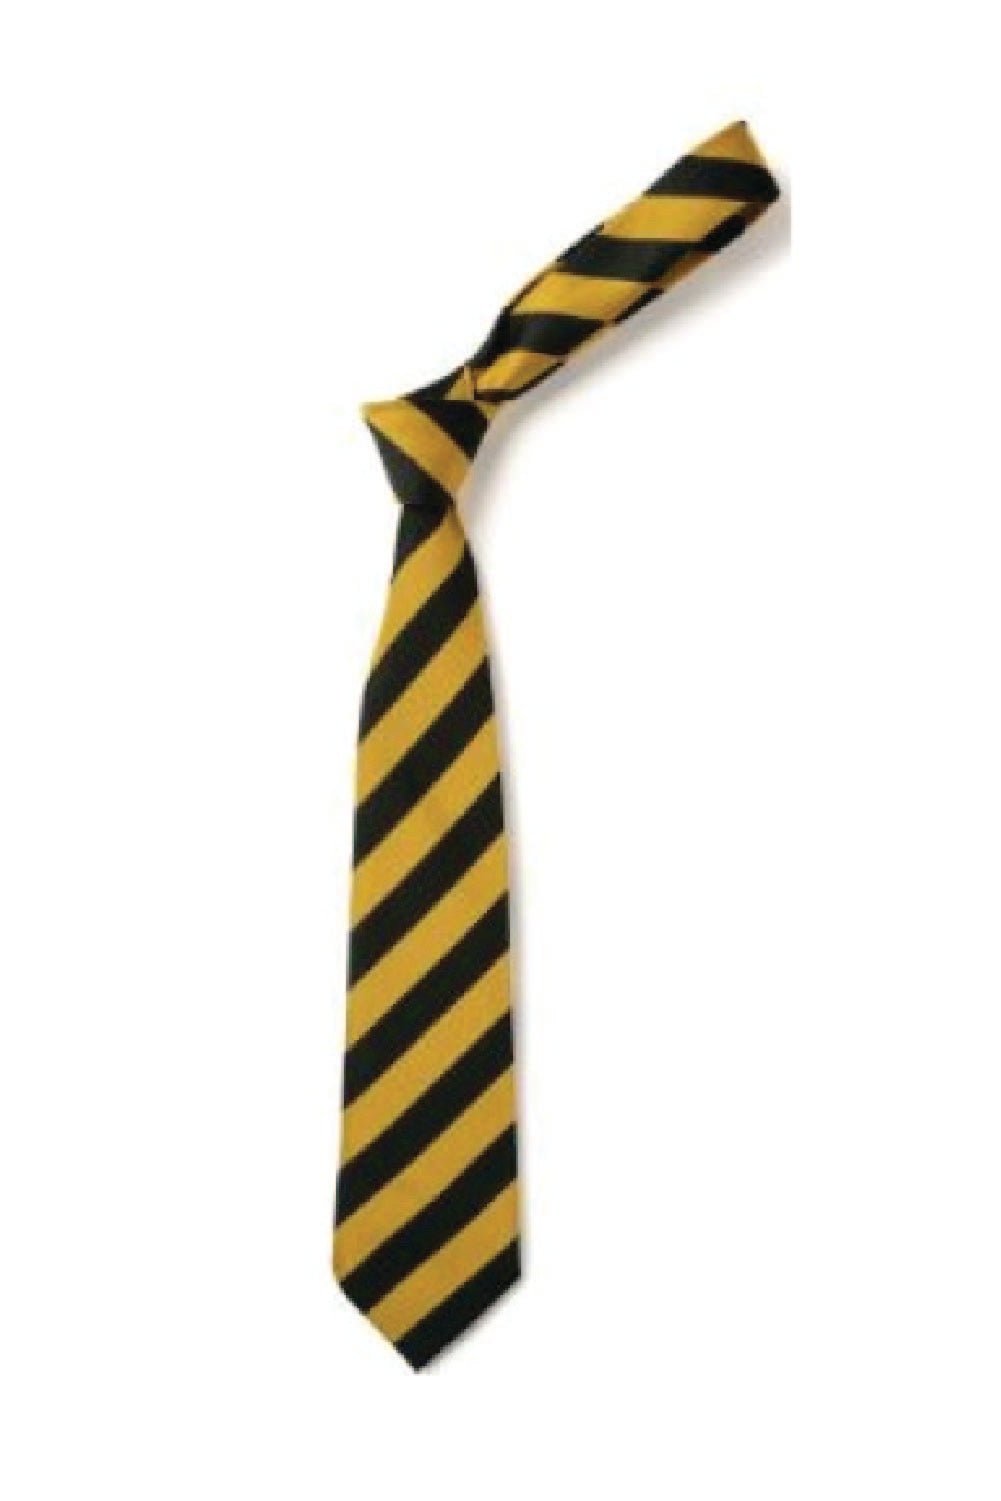 Giffards Primary School Tie (39 inch Long) - Uniformwise Schoolwear